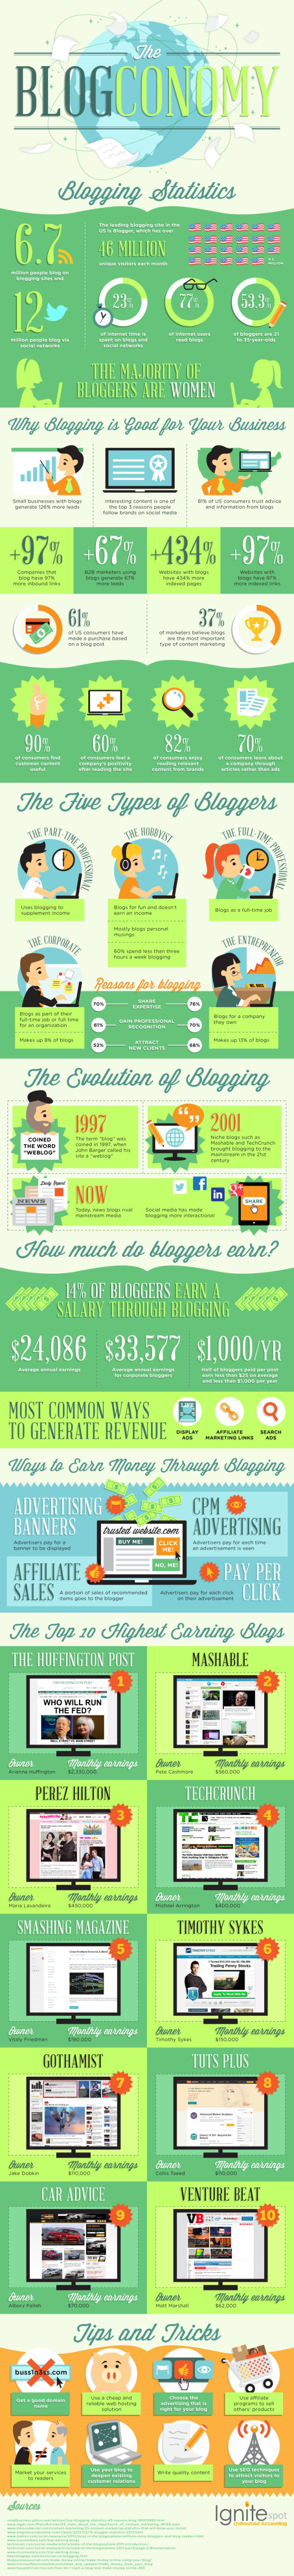 The Blogconomy: Blogging Stats [INFOGRAPHIC]